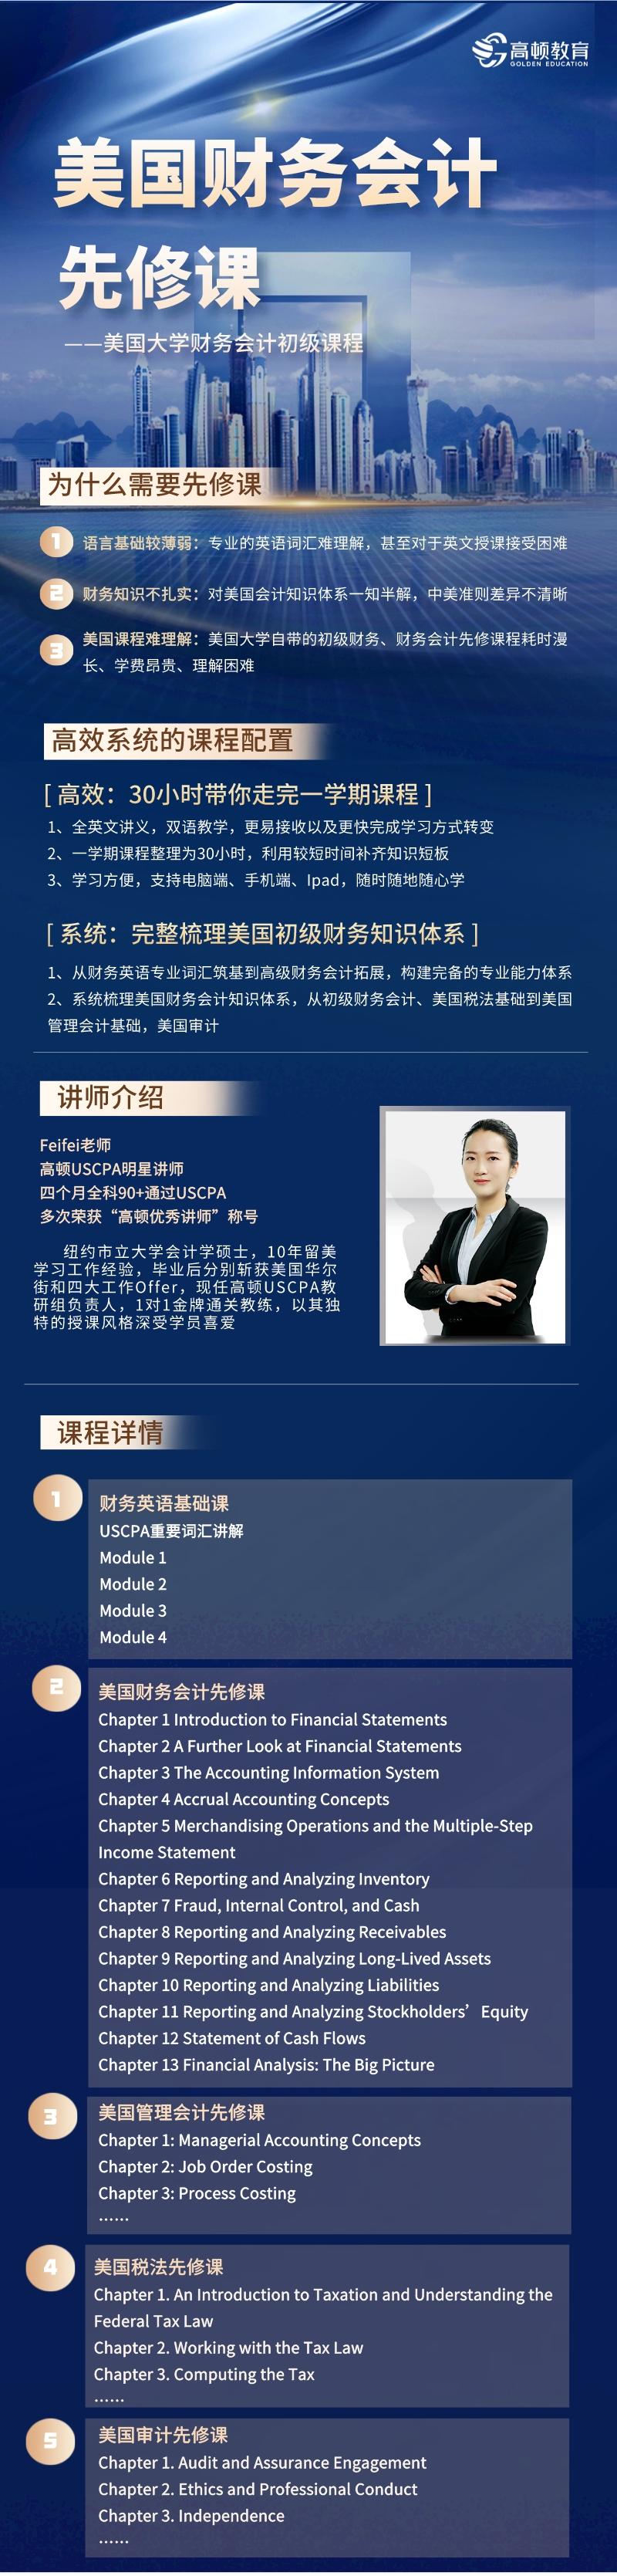 https://simg01.gaodunwangxiao.com/uploadfiles/product-center/202211/17/0bd29_20221117135330.jpeg